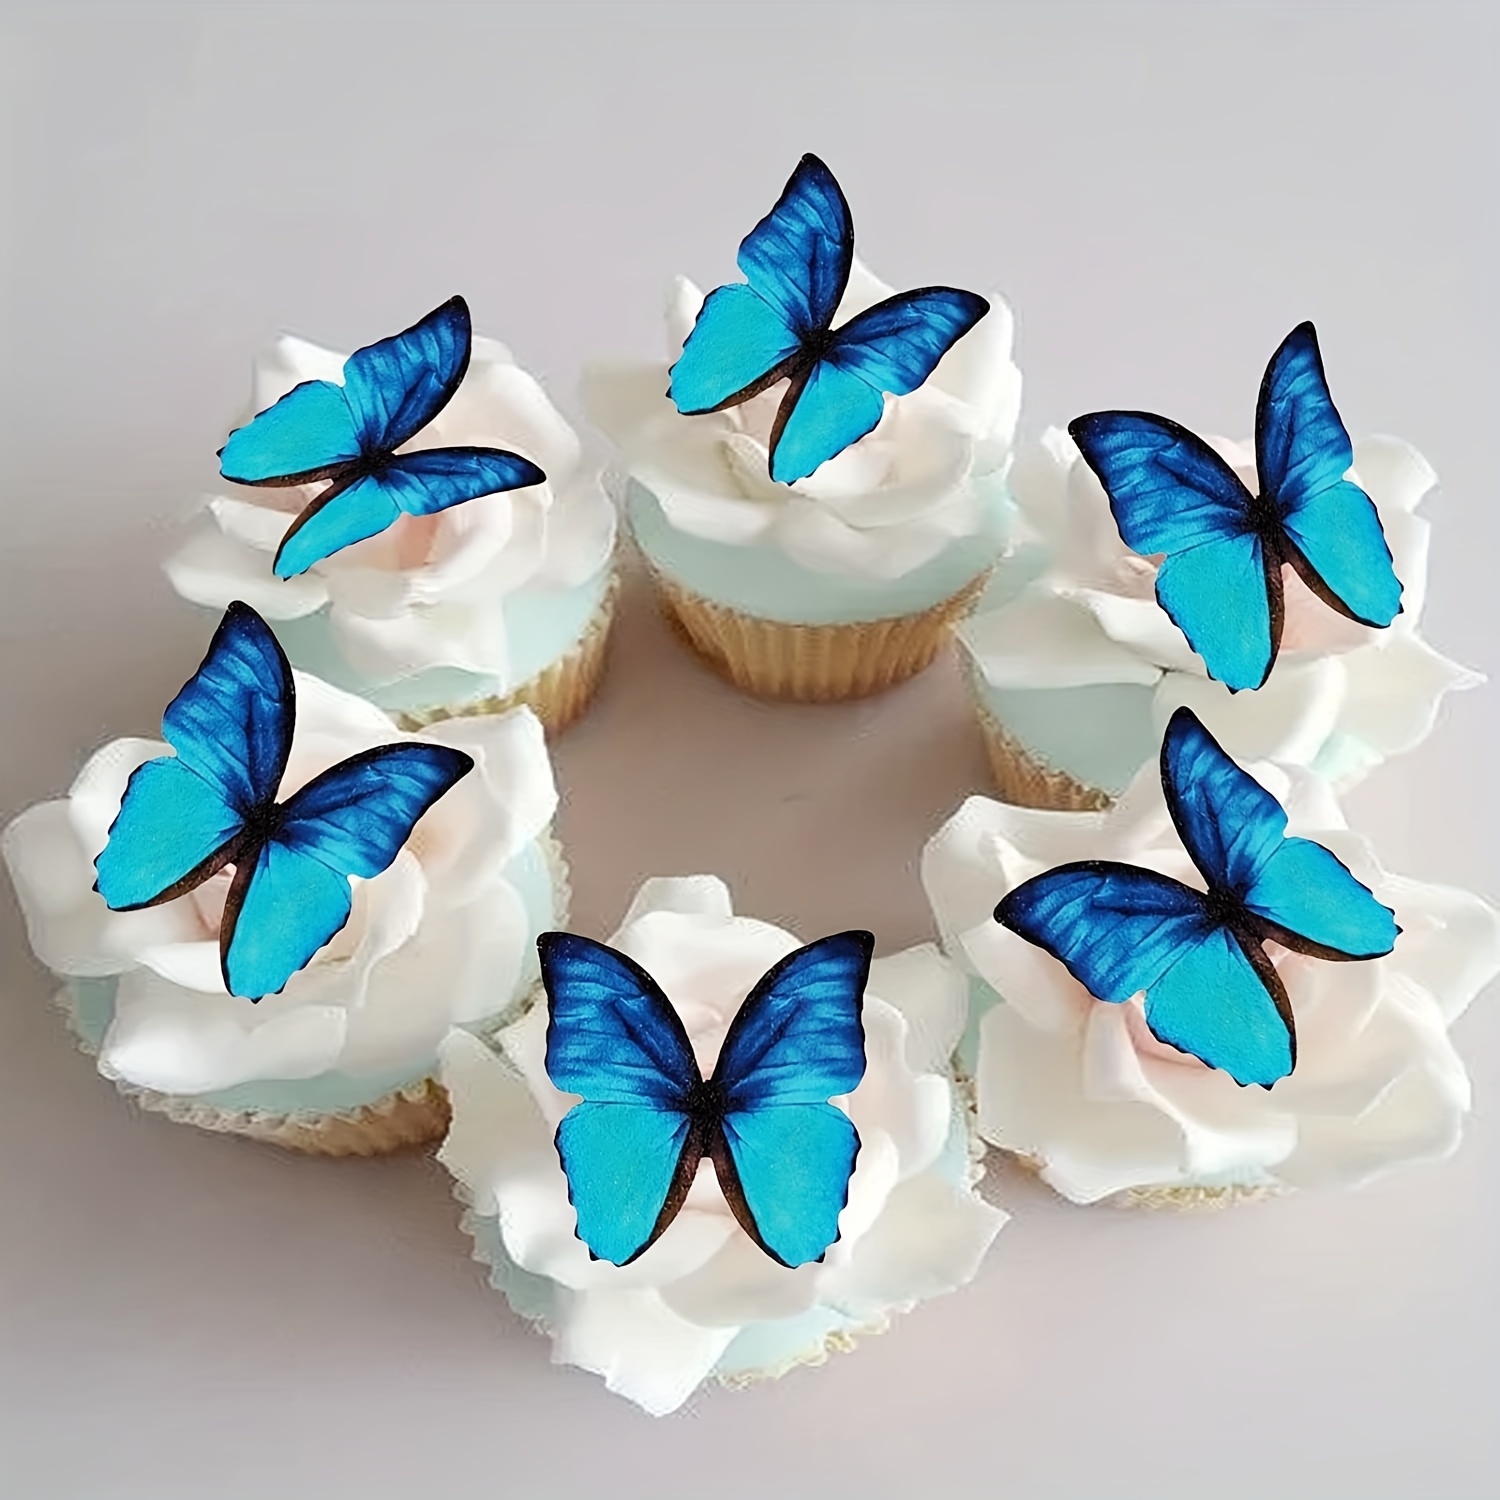 15 grandes mariposas comestibles en ombre púrpura para decorar pasteles.  Primeros de la torta de boda de las mariposas del papel de la oblea,  decoraciones de la magdalena -  México